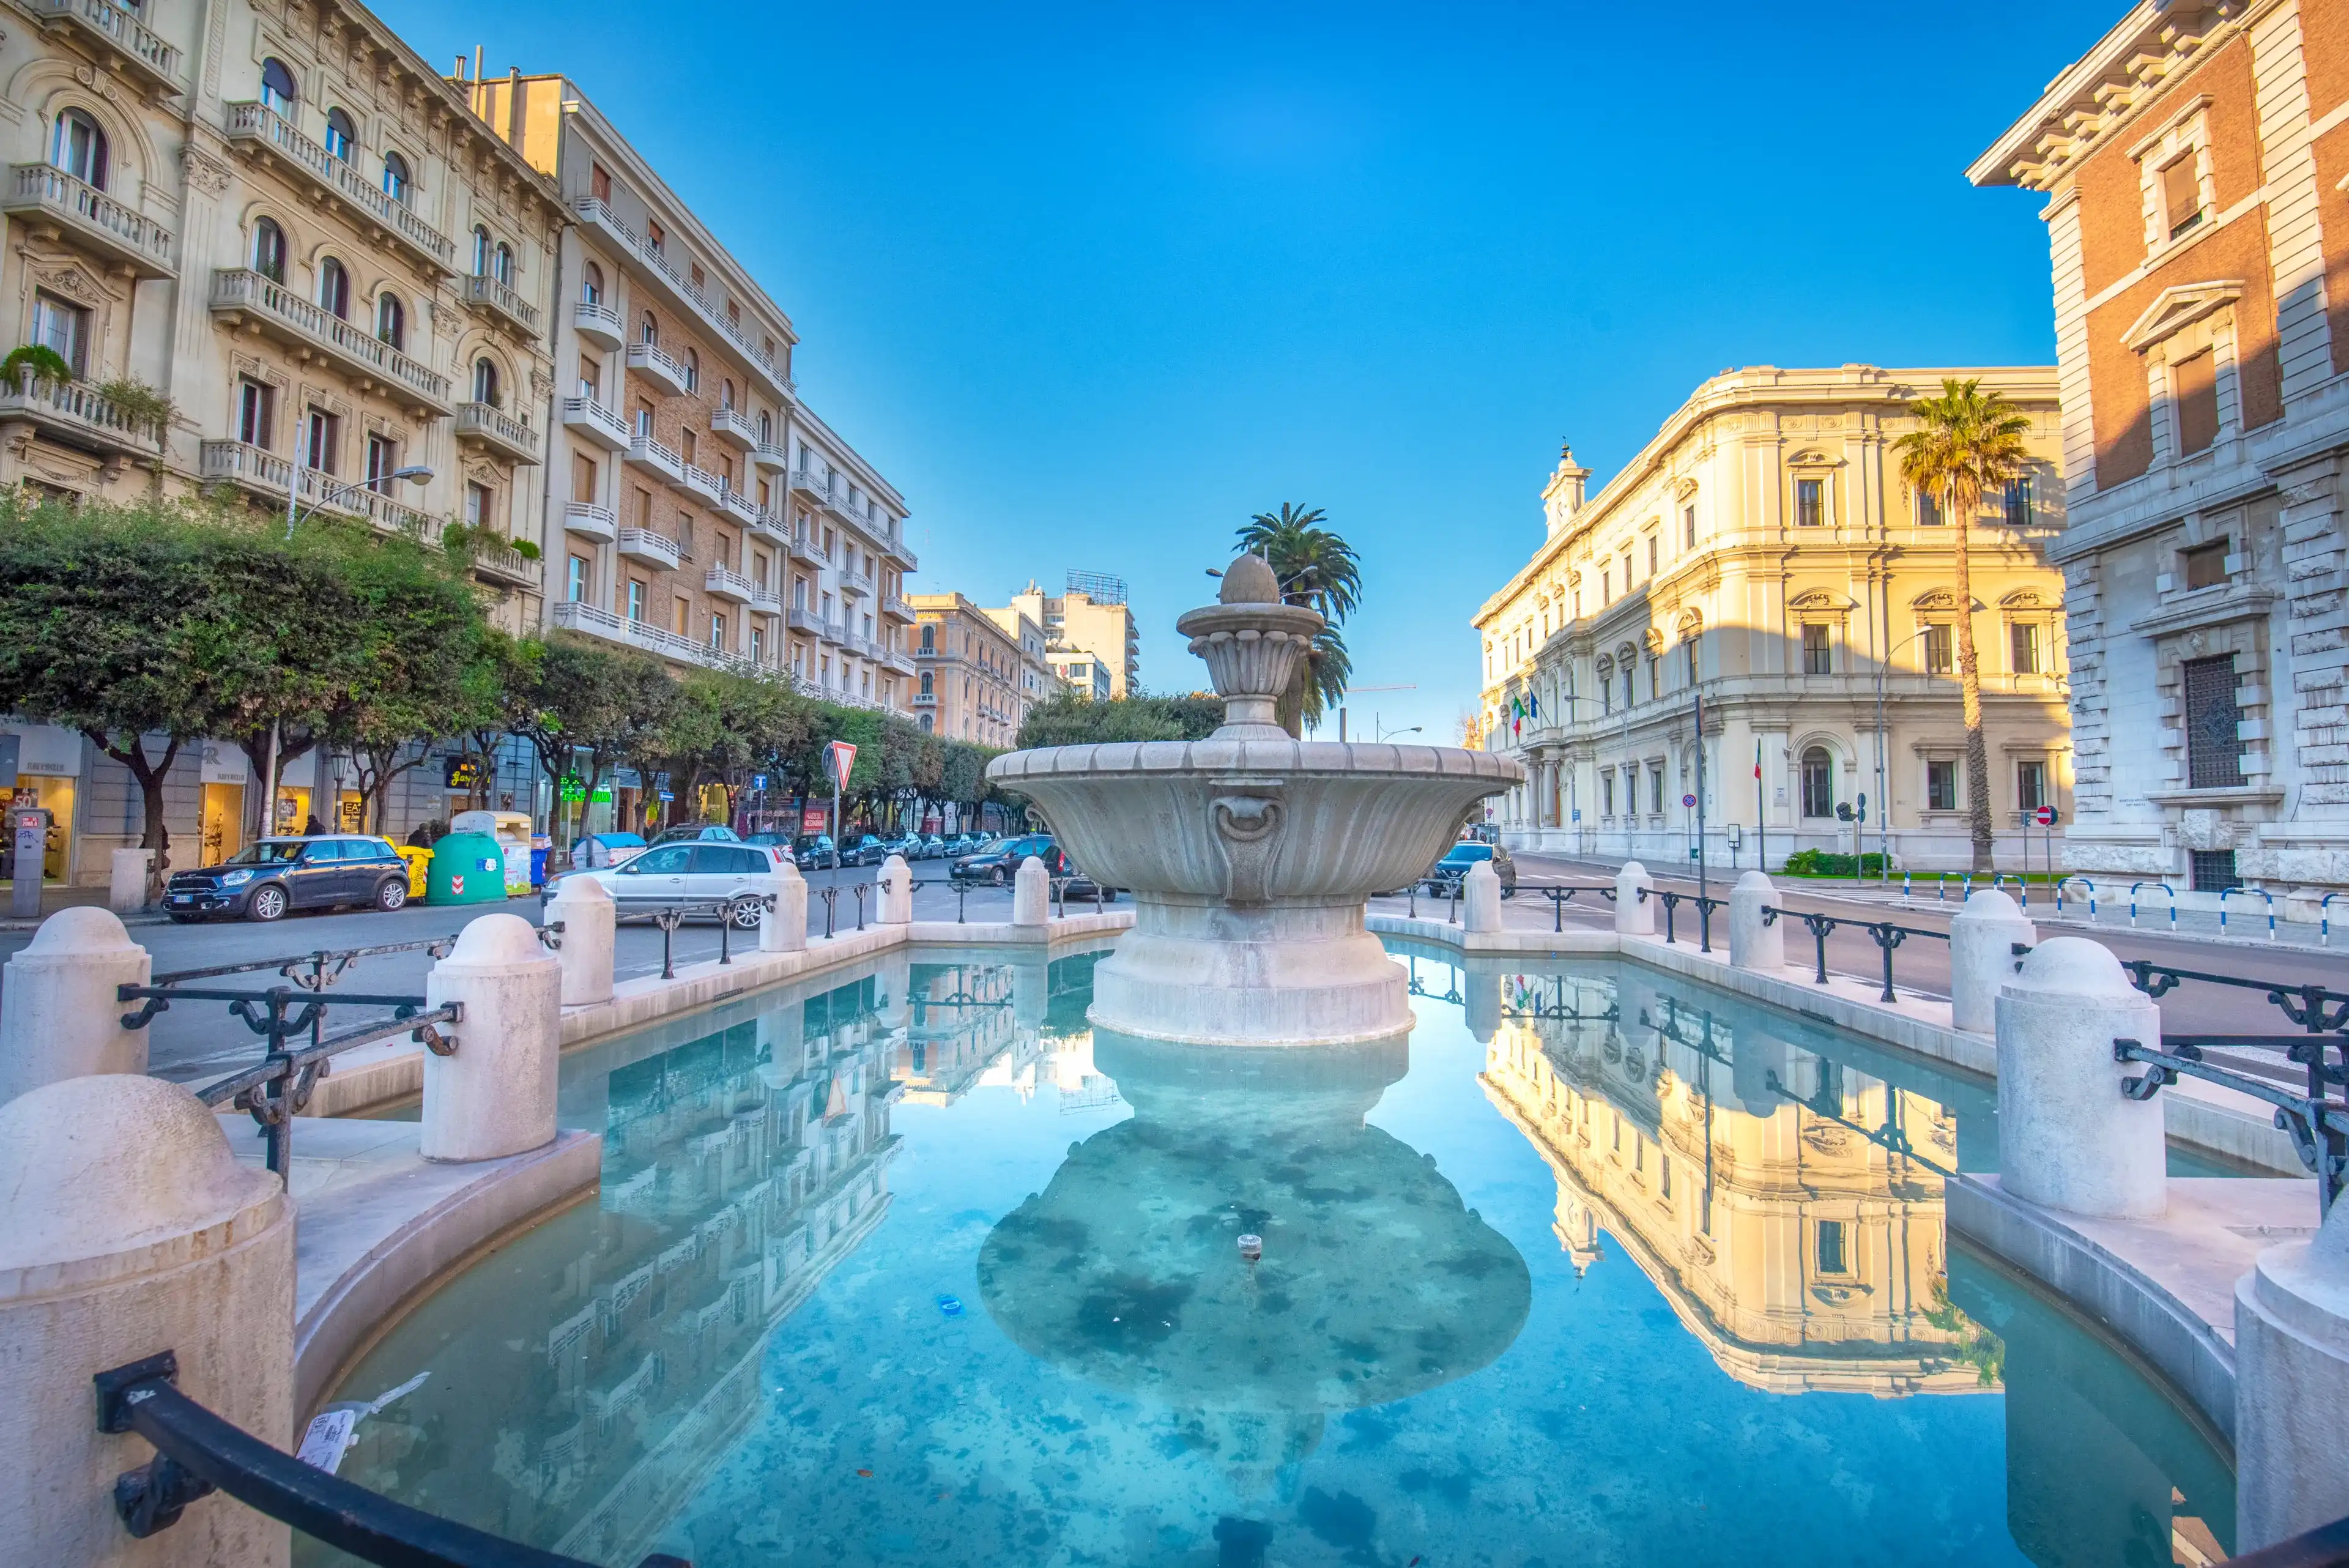 Best Bari hotels. Cheap hotels in Bari, Italy